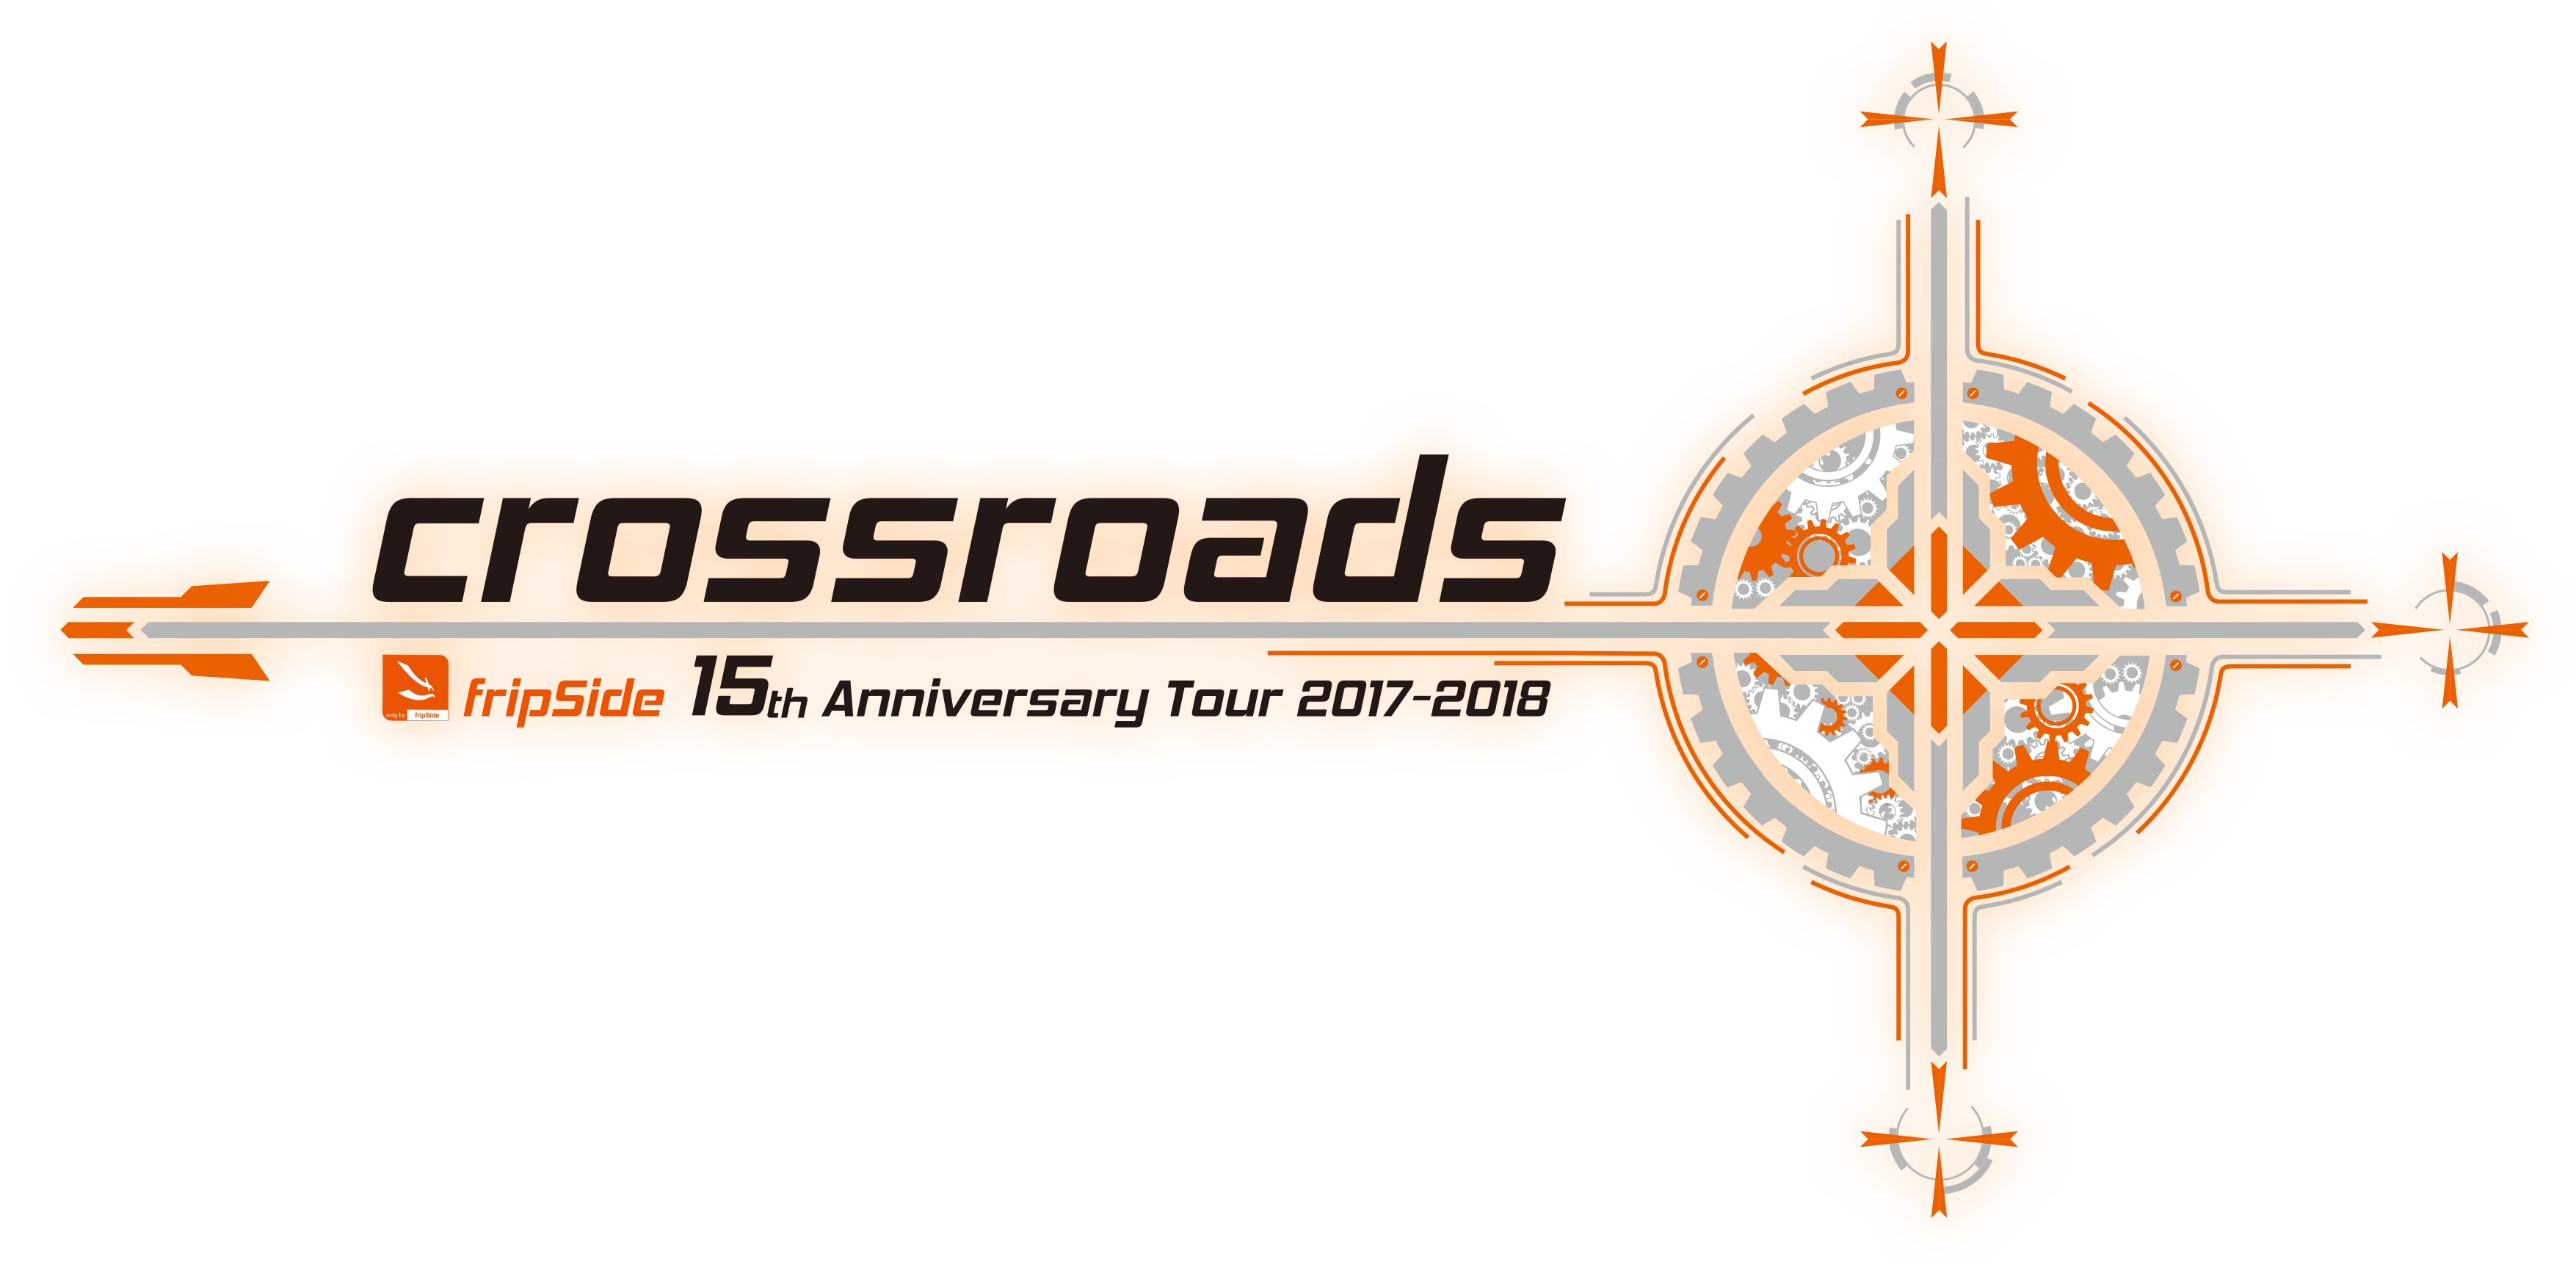 Fripside 15th Anniversary Tour 17 18 Crossroads 幕張day1 萌娘百科萬物皆可萌的百科全書